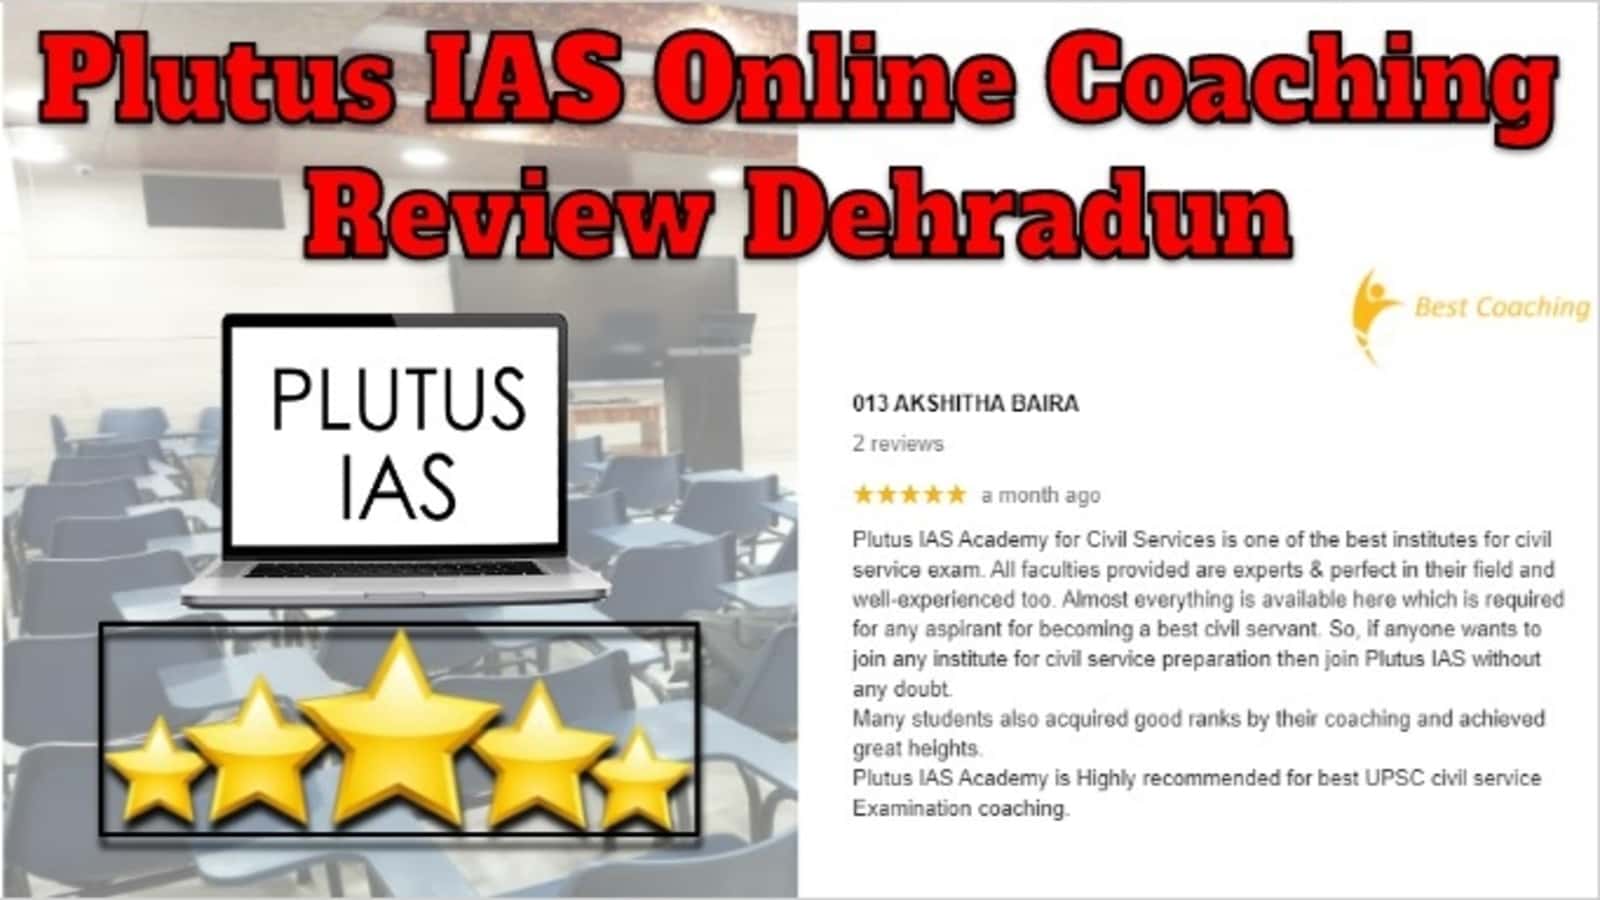 Plutus IAS Online Coaching Review Dehradun